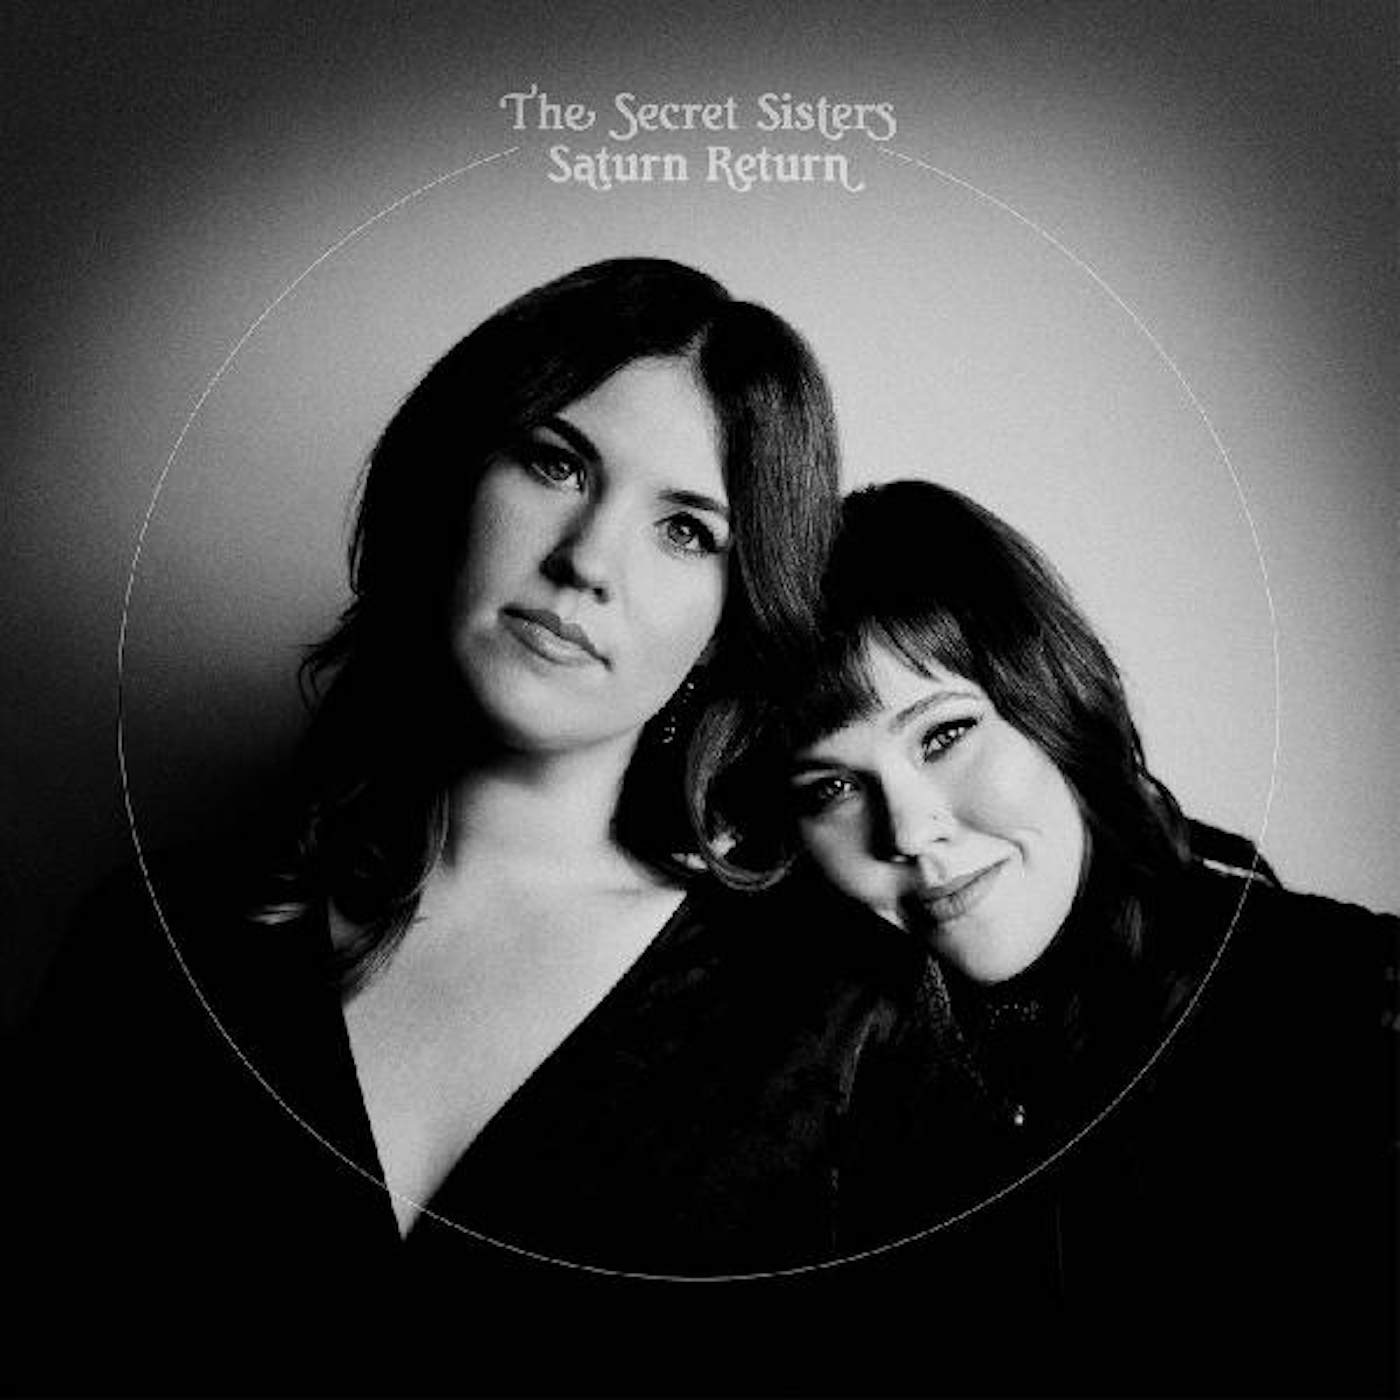 The Secret Sisters SATURN RETURN CD